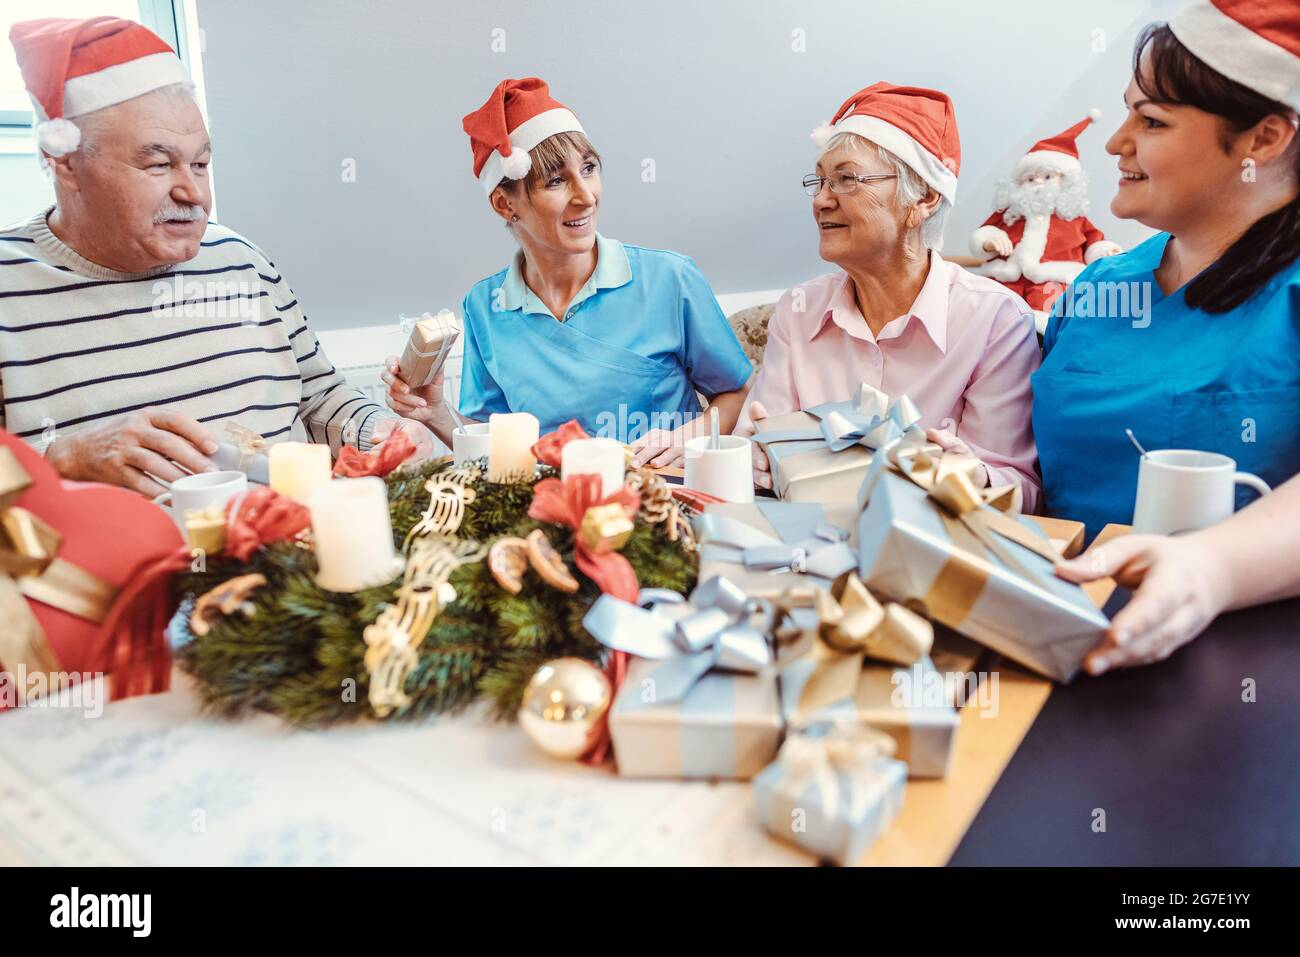 https://c8.alamy.com/comp/2G7E1YY/christmas-with-presents-in-the-nursing-home-seniors-and-nurses-celebrating-together-2G7E1YY.jpg